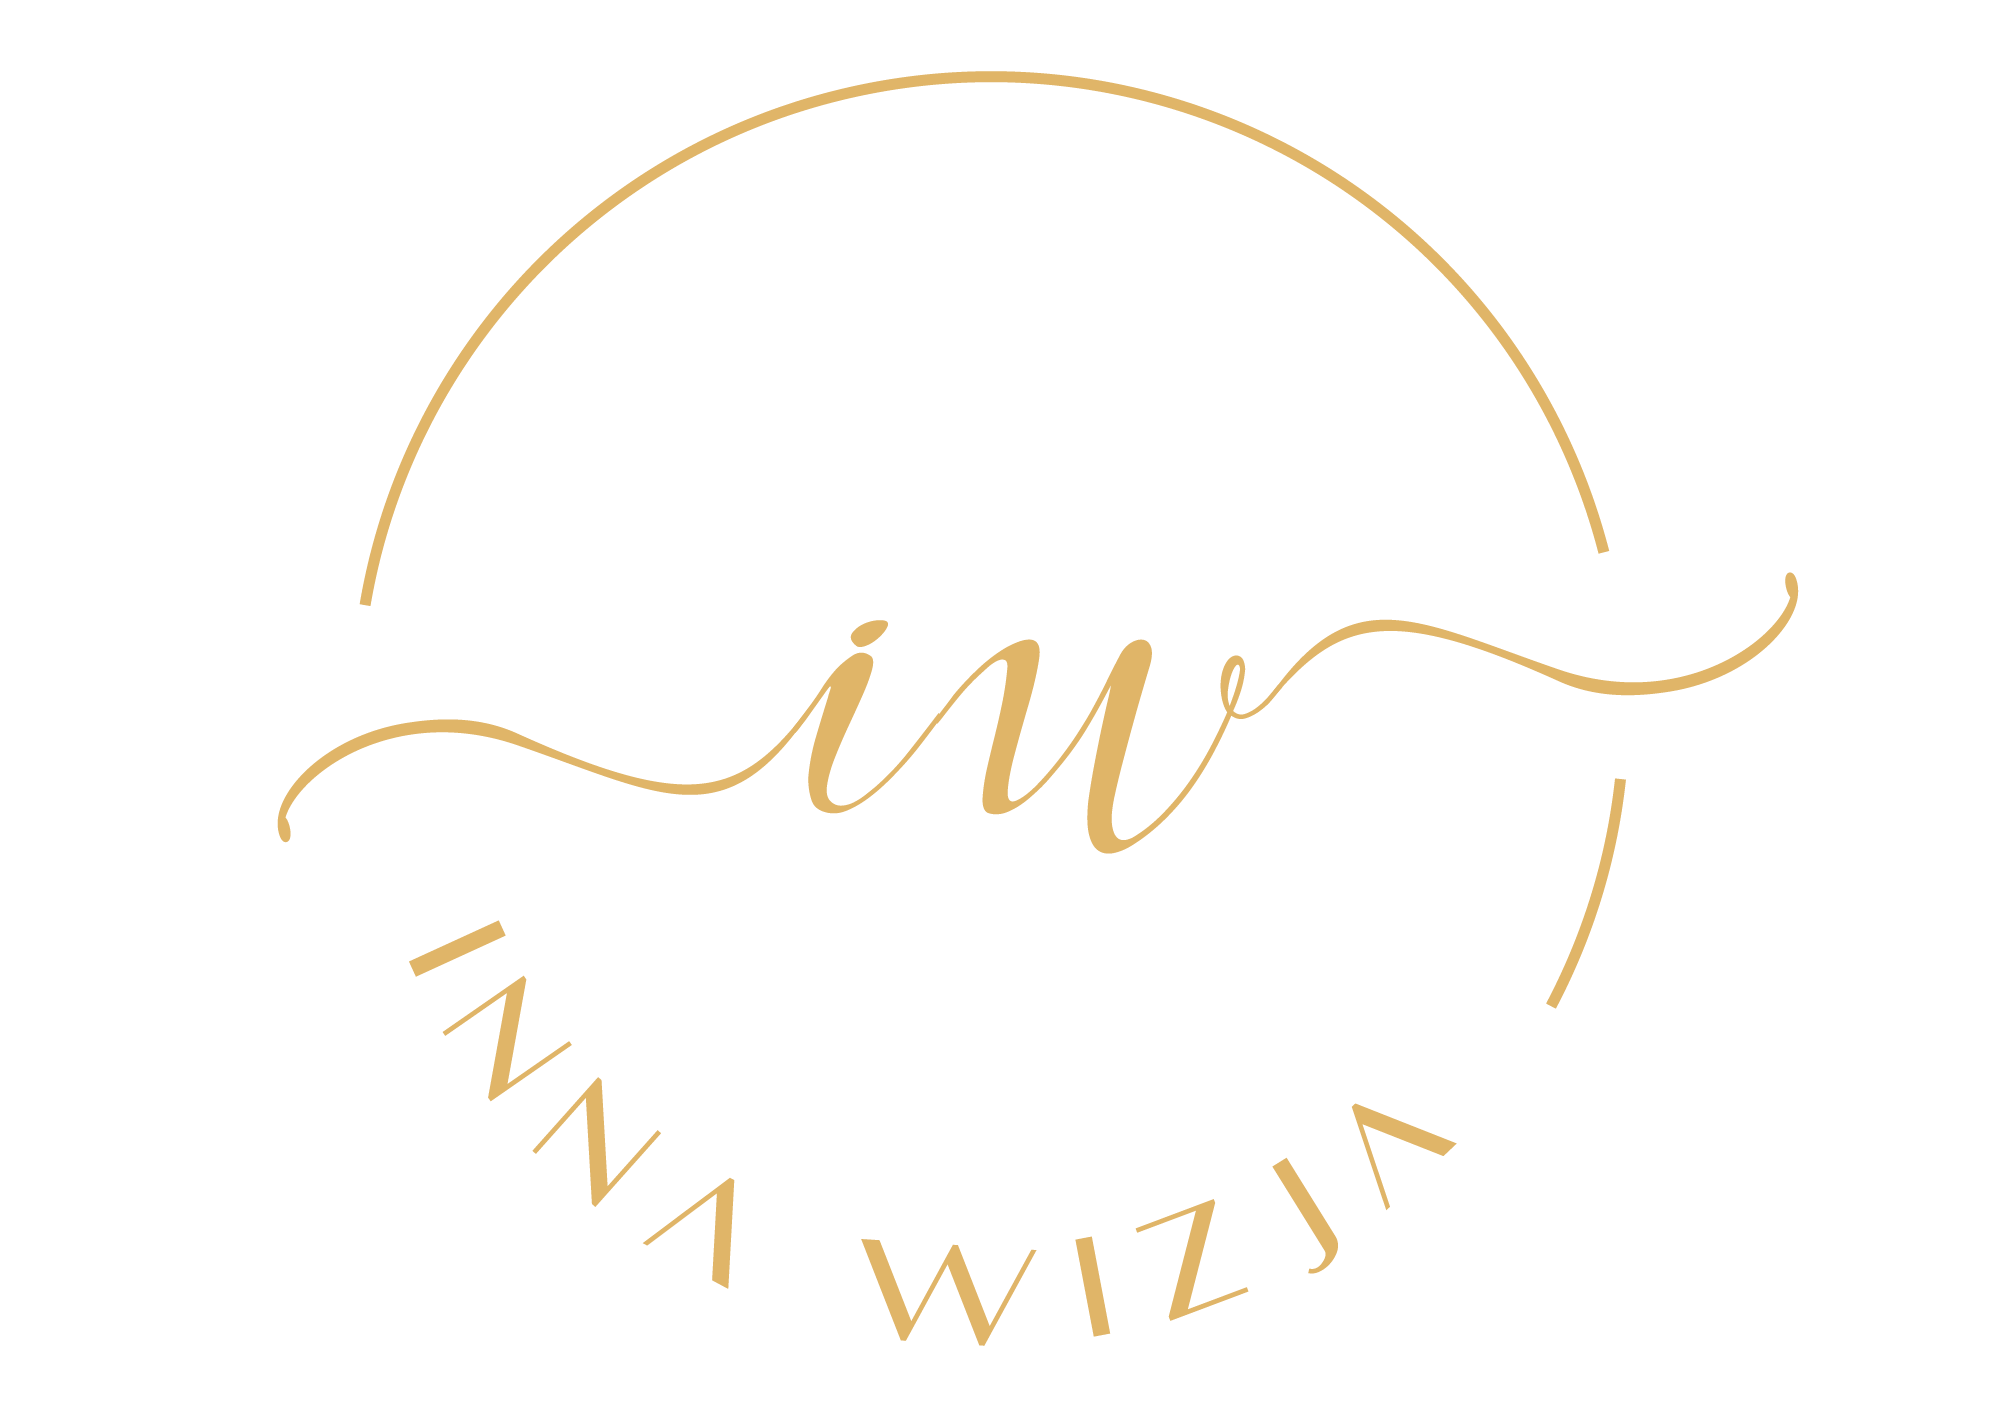 logo-innawizja-zlote-03